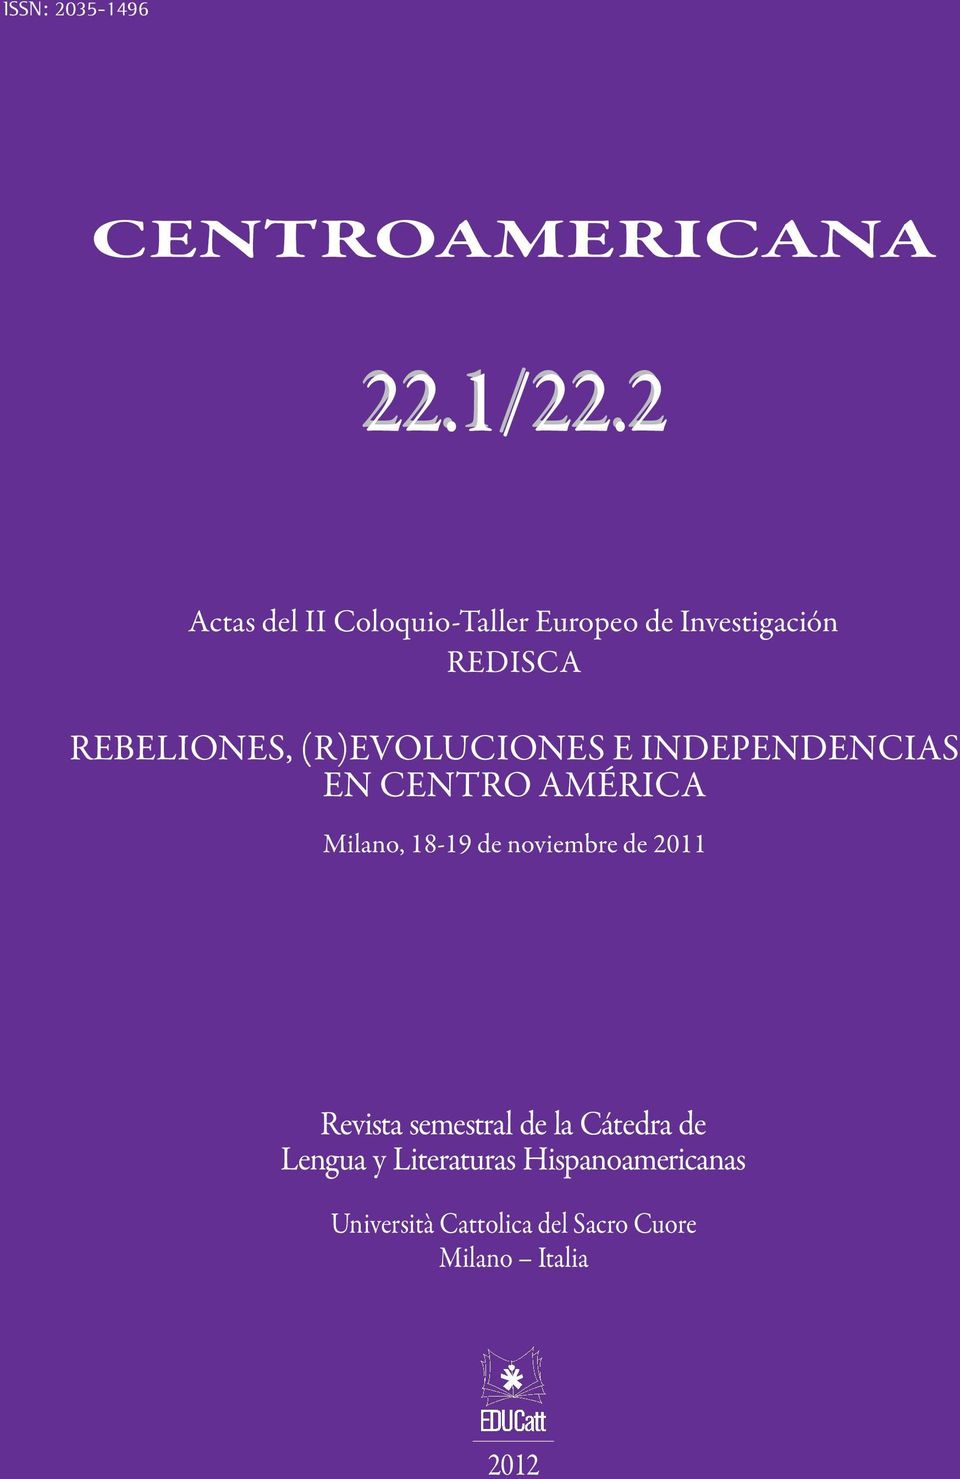 (R)EVOLUCIONES E INDEPENDENCIAS EN CENTRO AMÉRICA Milano, 18-19 de noviembre de